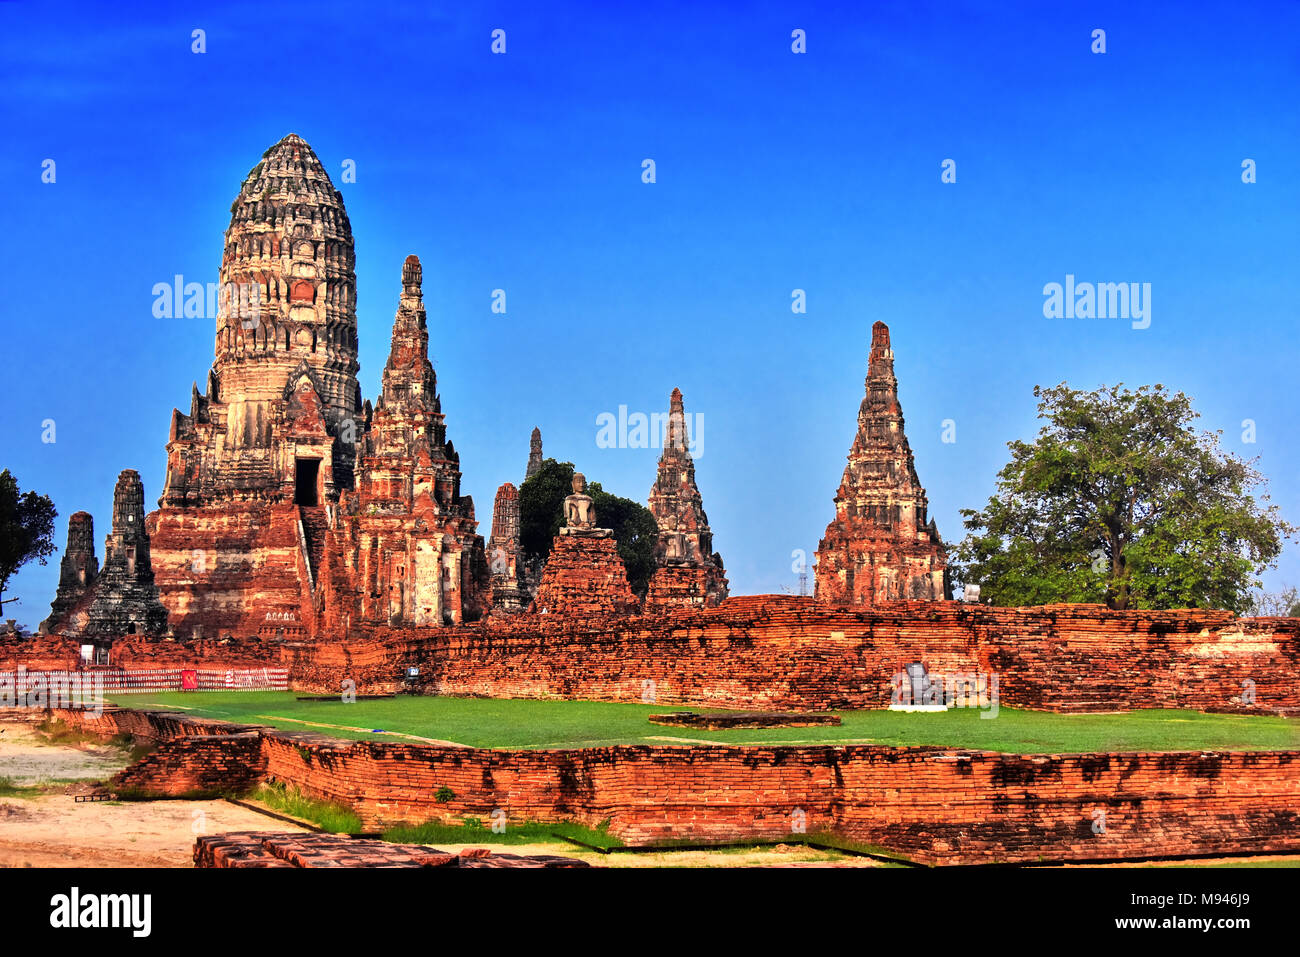 Wat Chaiwatthanaram, a Buddhist temple in the city of Ayutthaya Historical Park, Thailand Stock Photo